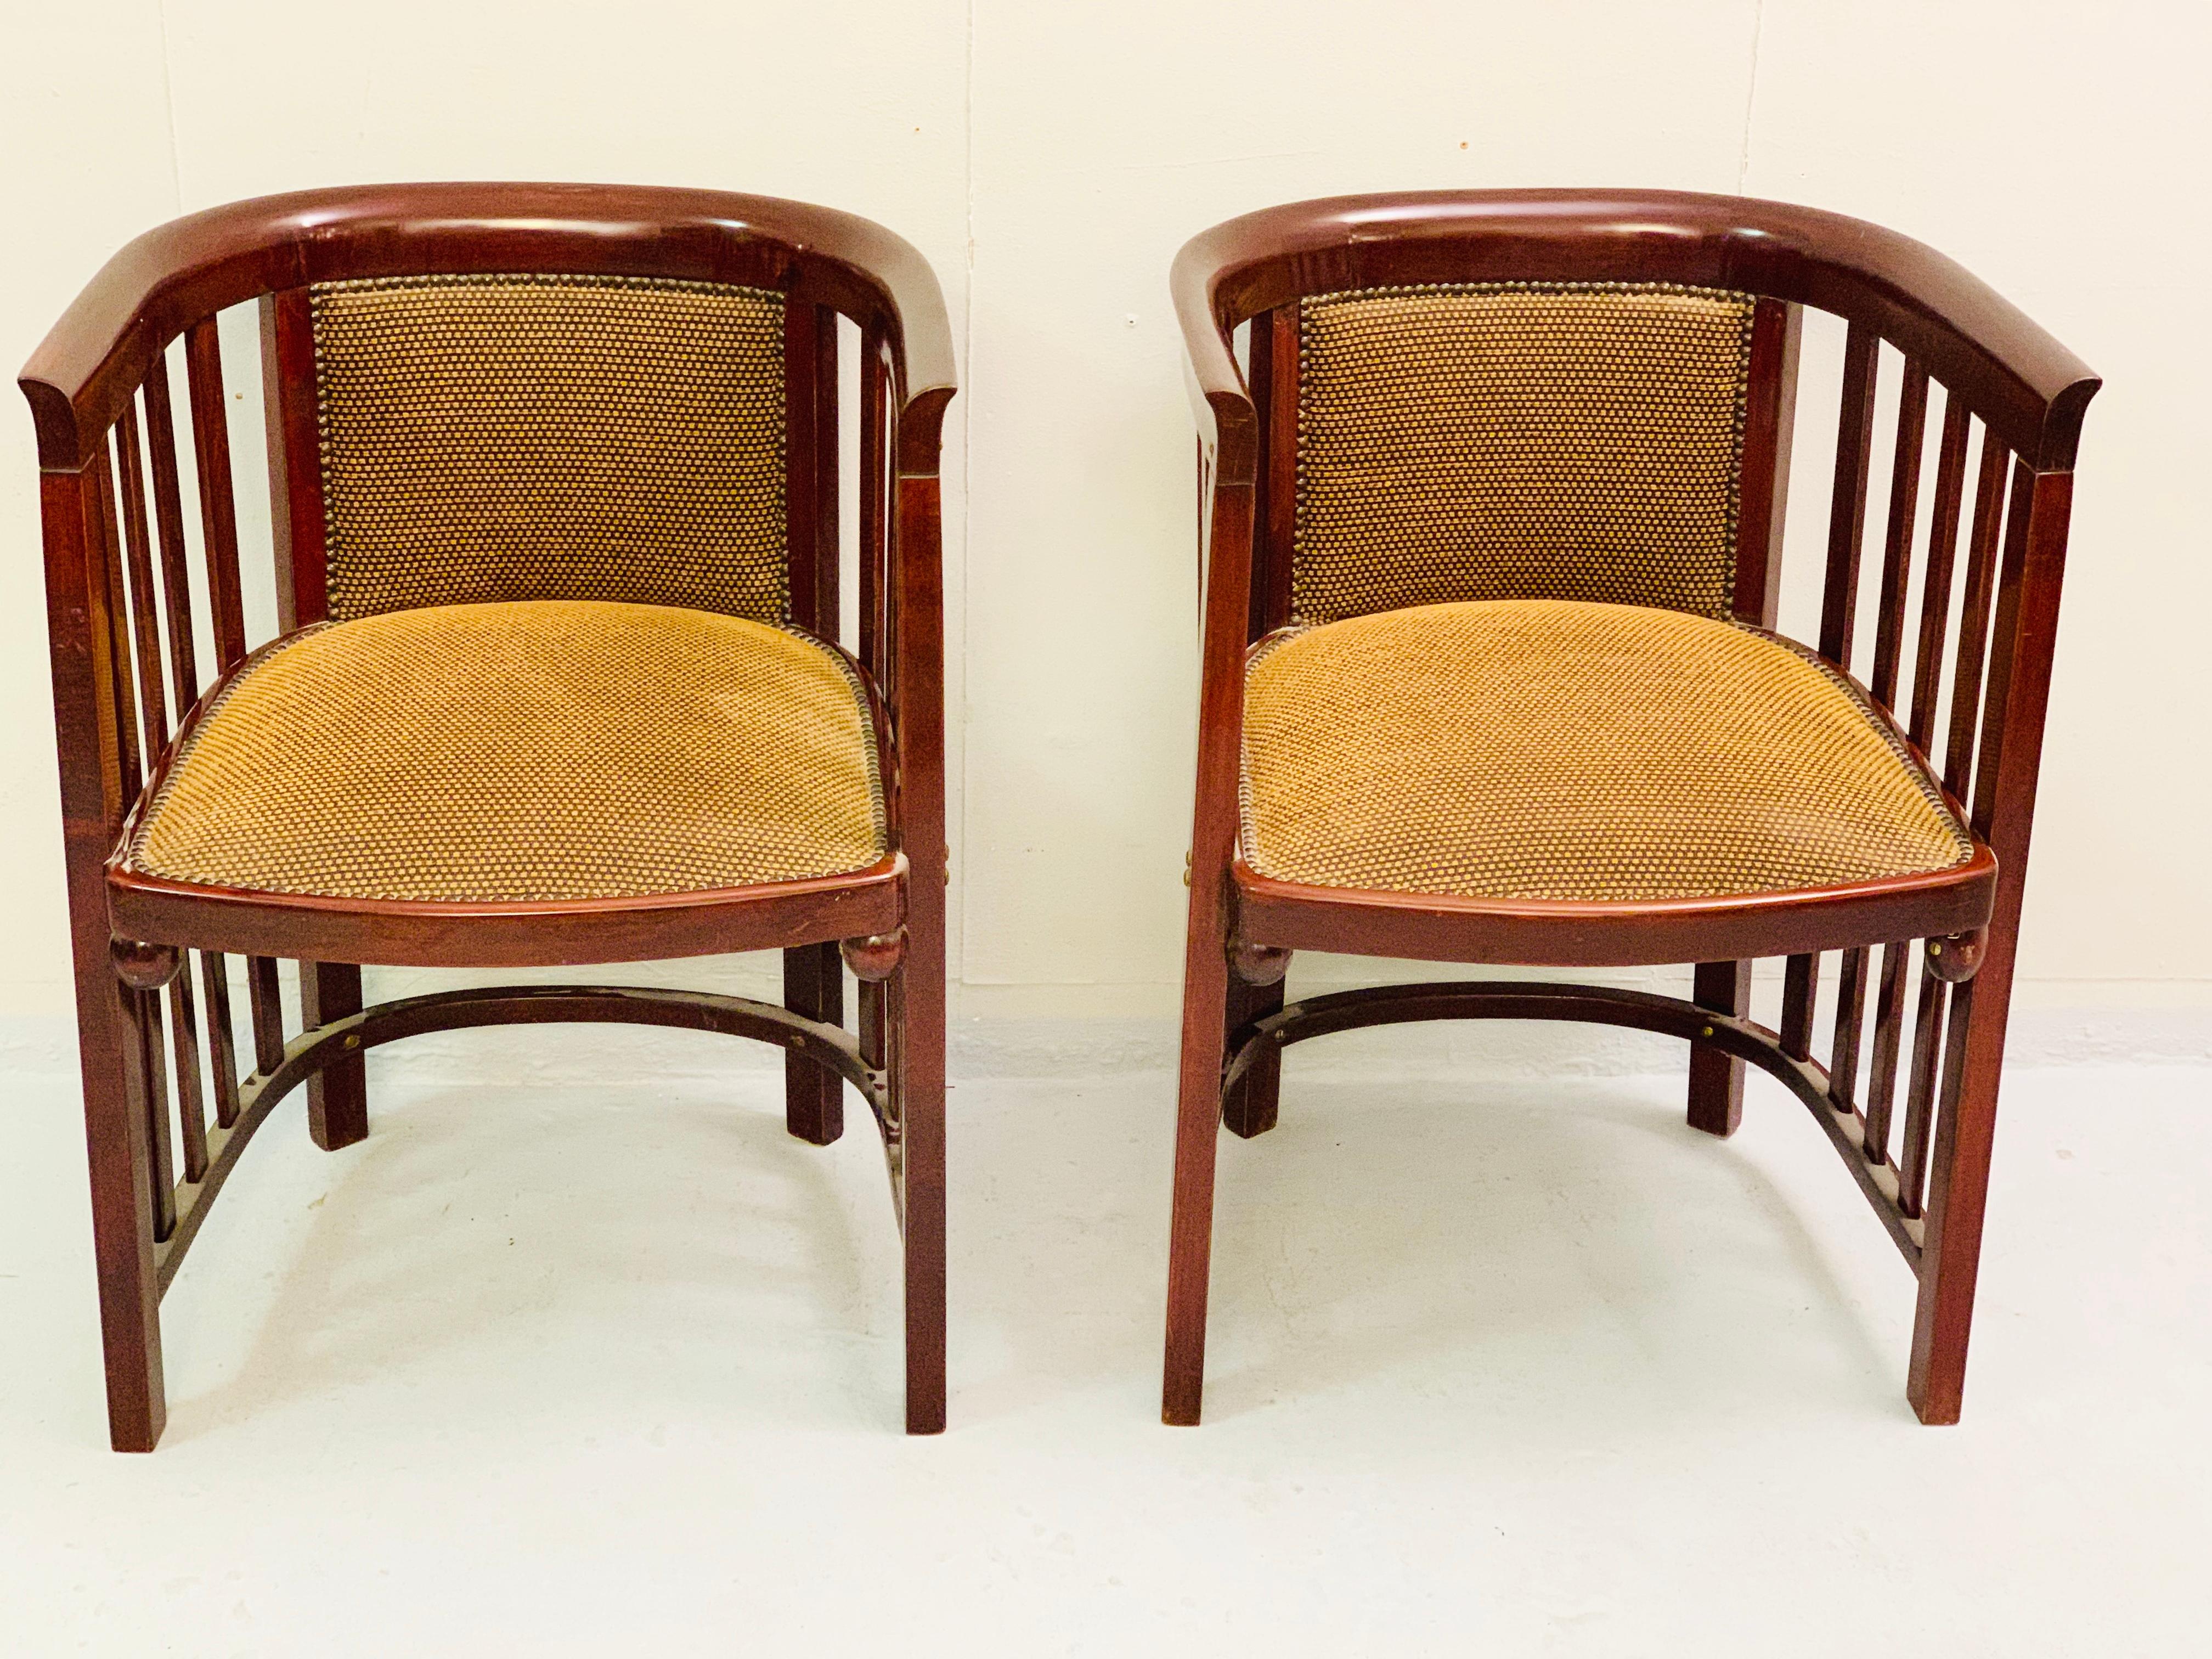 Pair of armchairs by Josef Hoffman, Austria, circa 1900s.